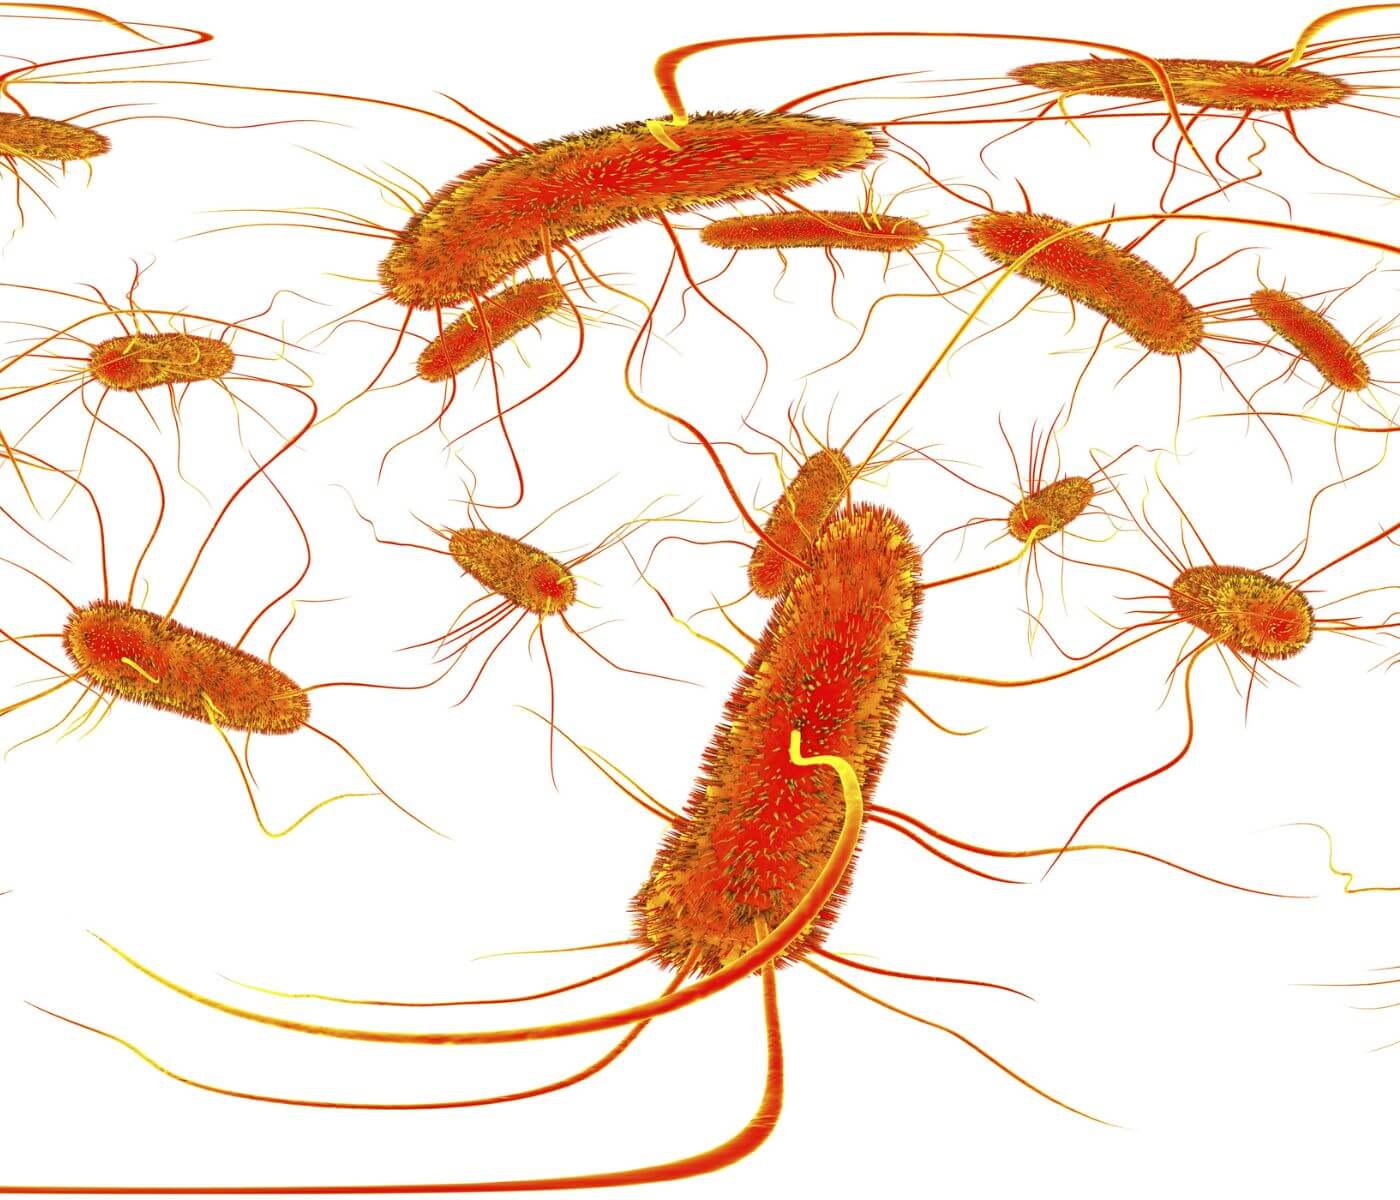 New study to develop antibiotic alternatives against Salmonella